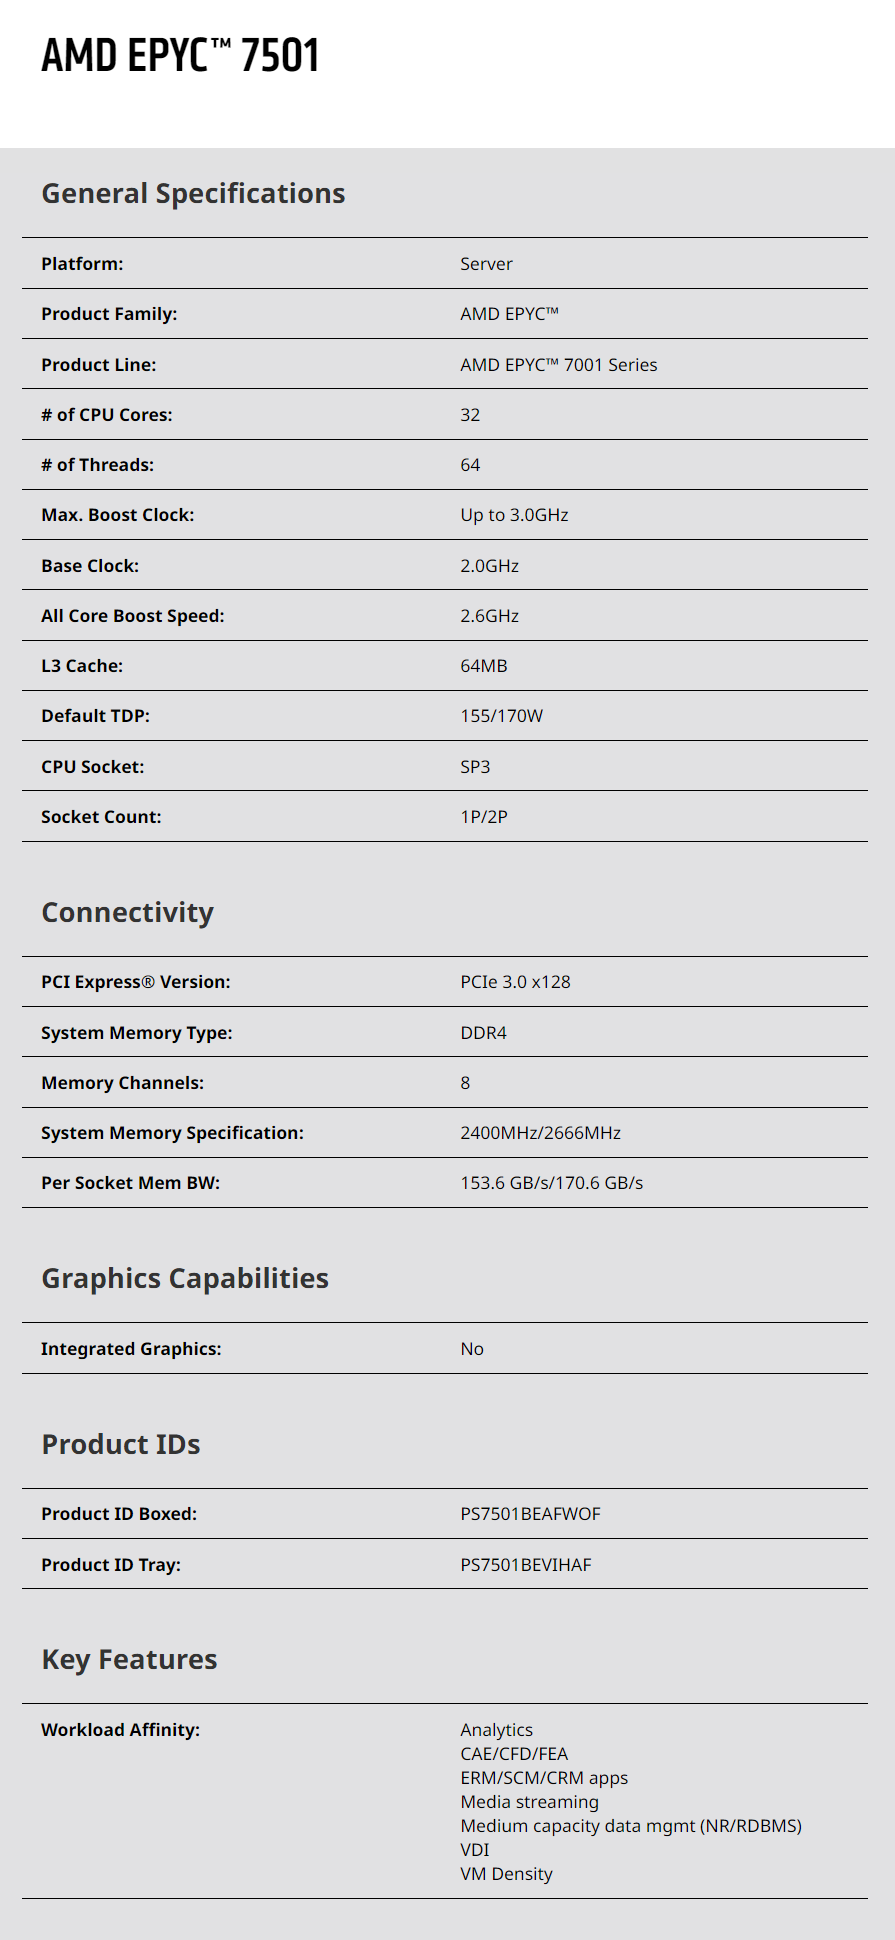 AMD EPYC 7501 CPU 32 Cores Processors Max 3 GHz Socket Count 1P/2P PS7501BEVIHAF AMD EPYC 7001 Series CPUs